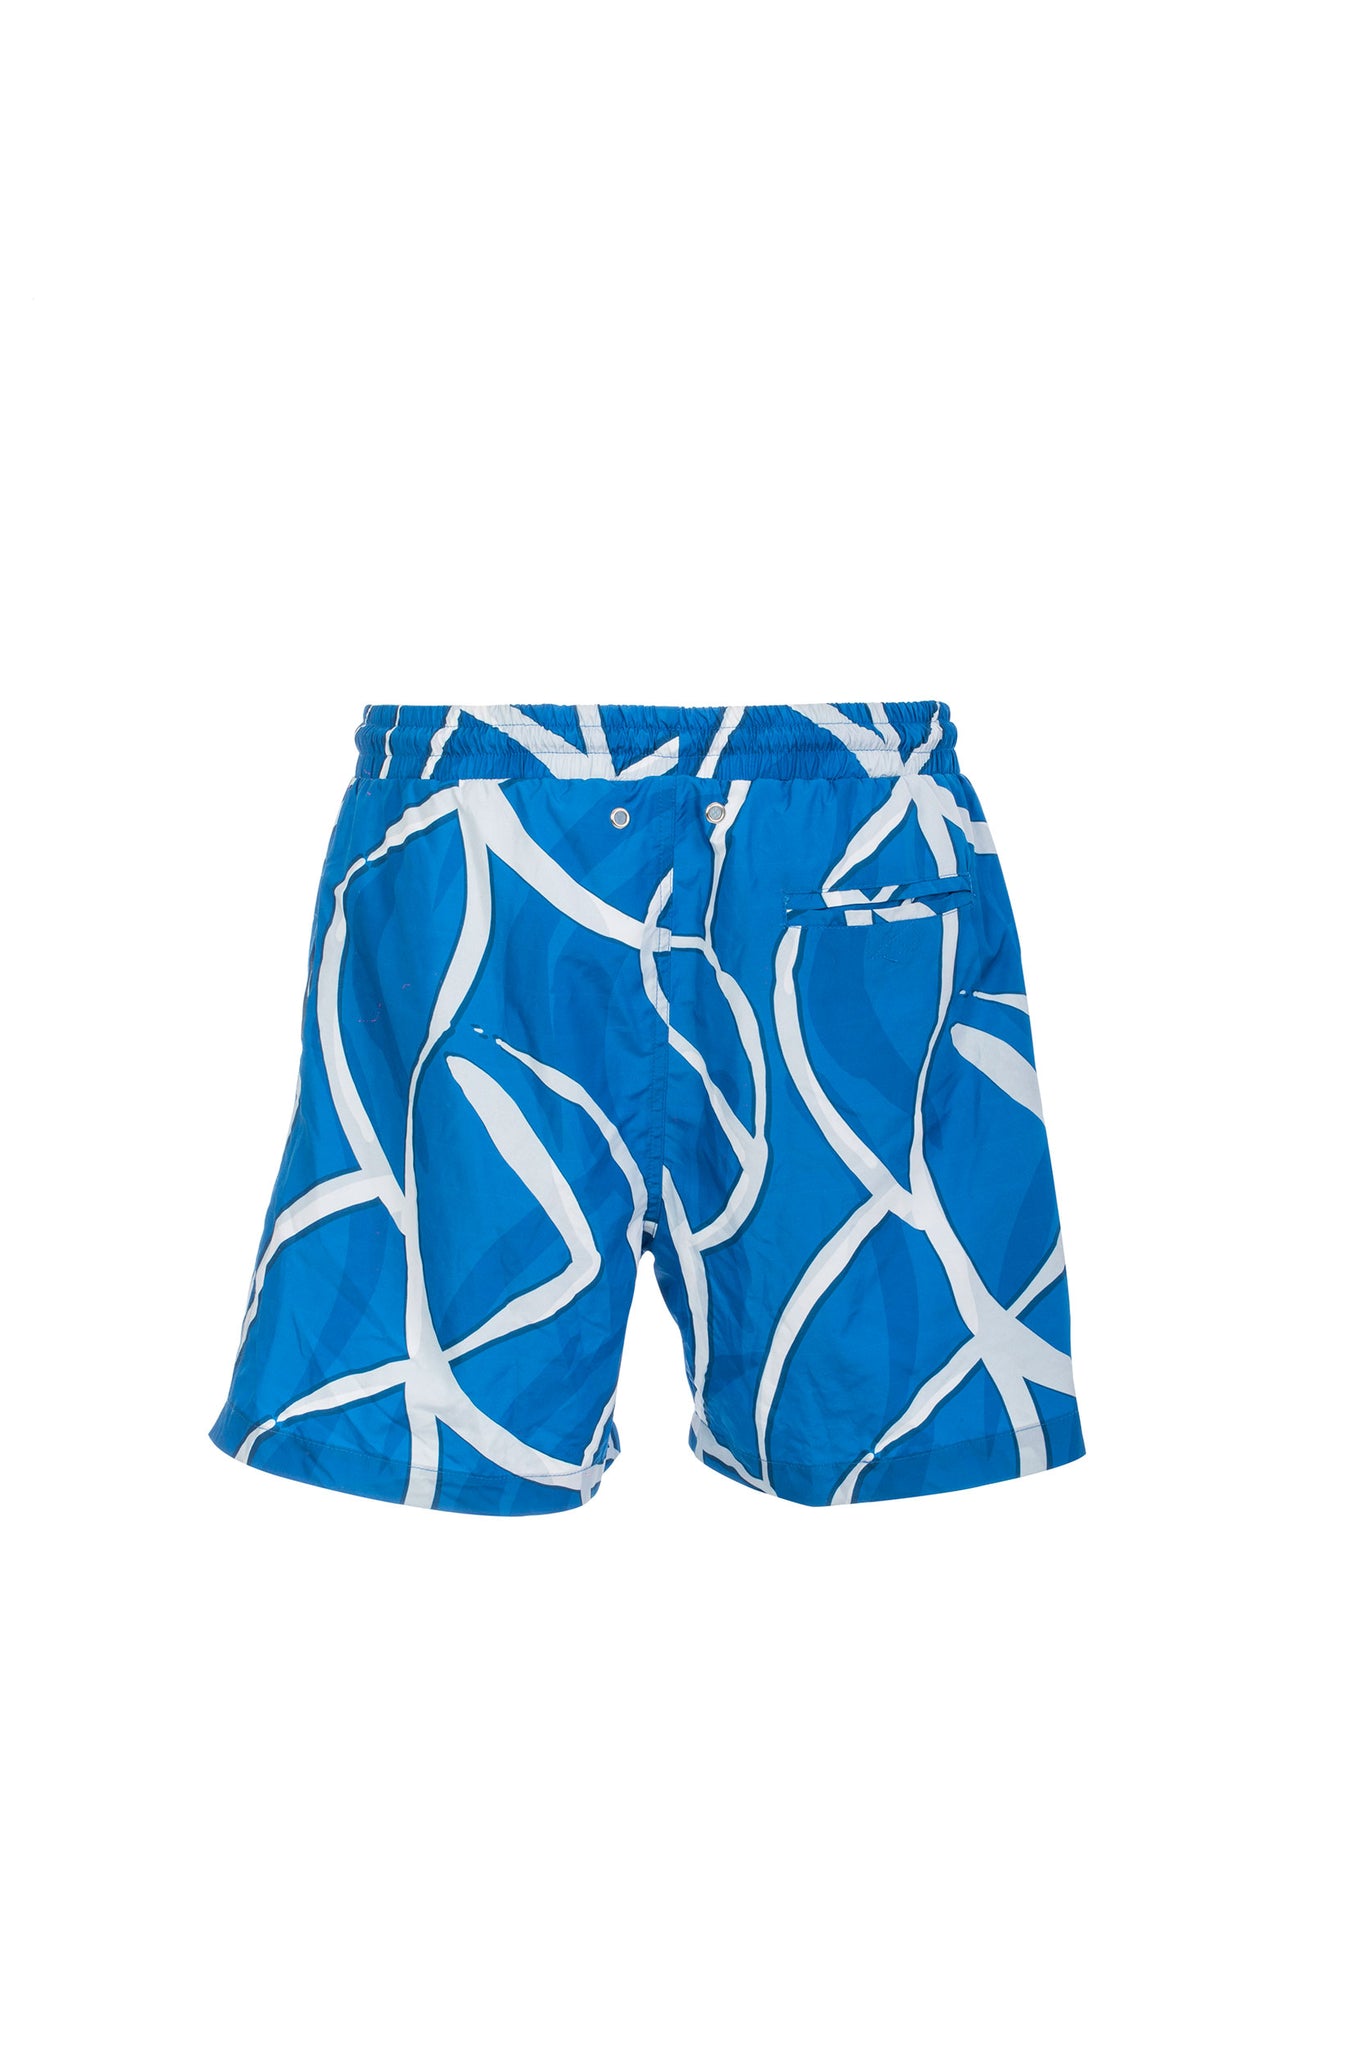 Men's Swim Shorts | Waves